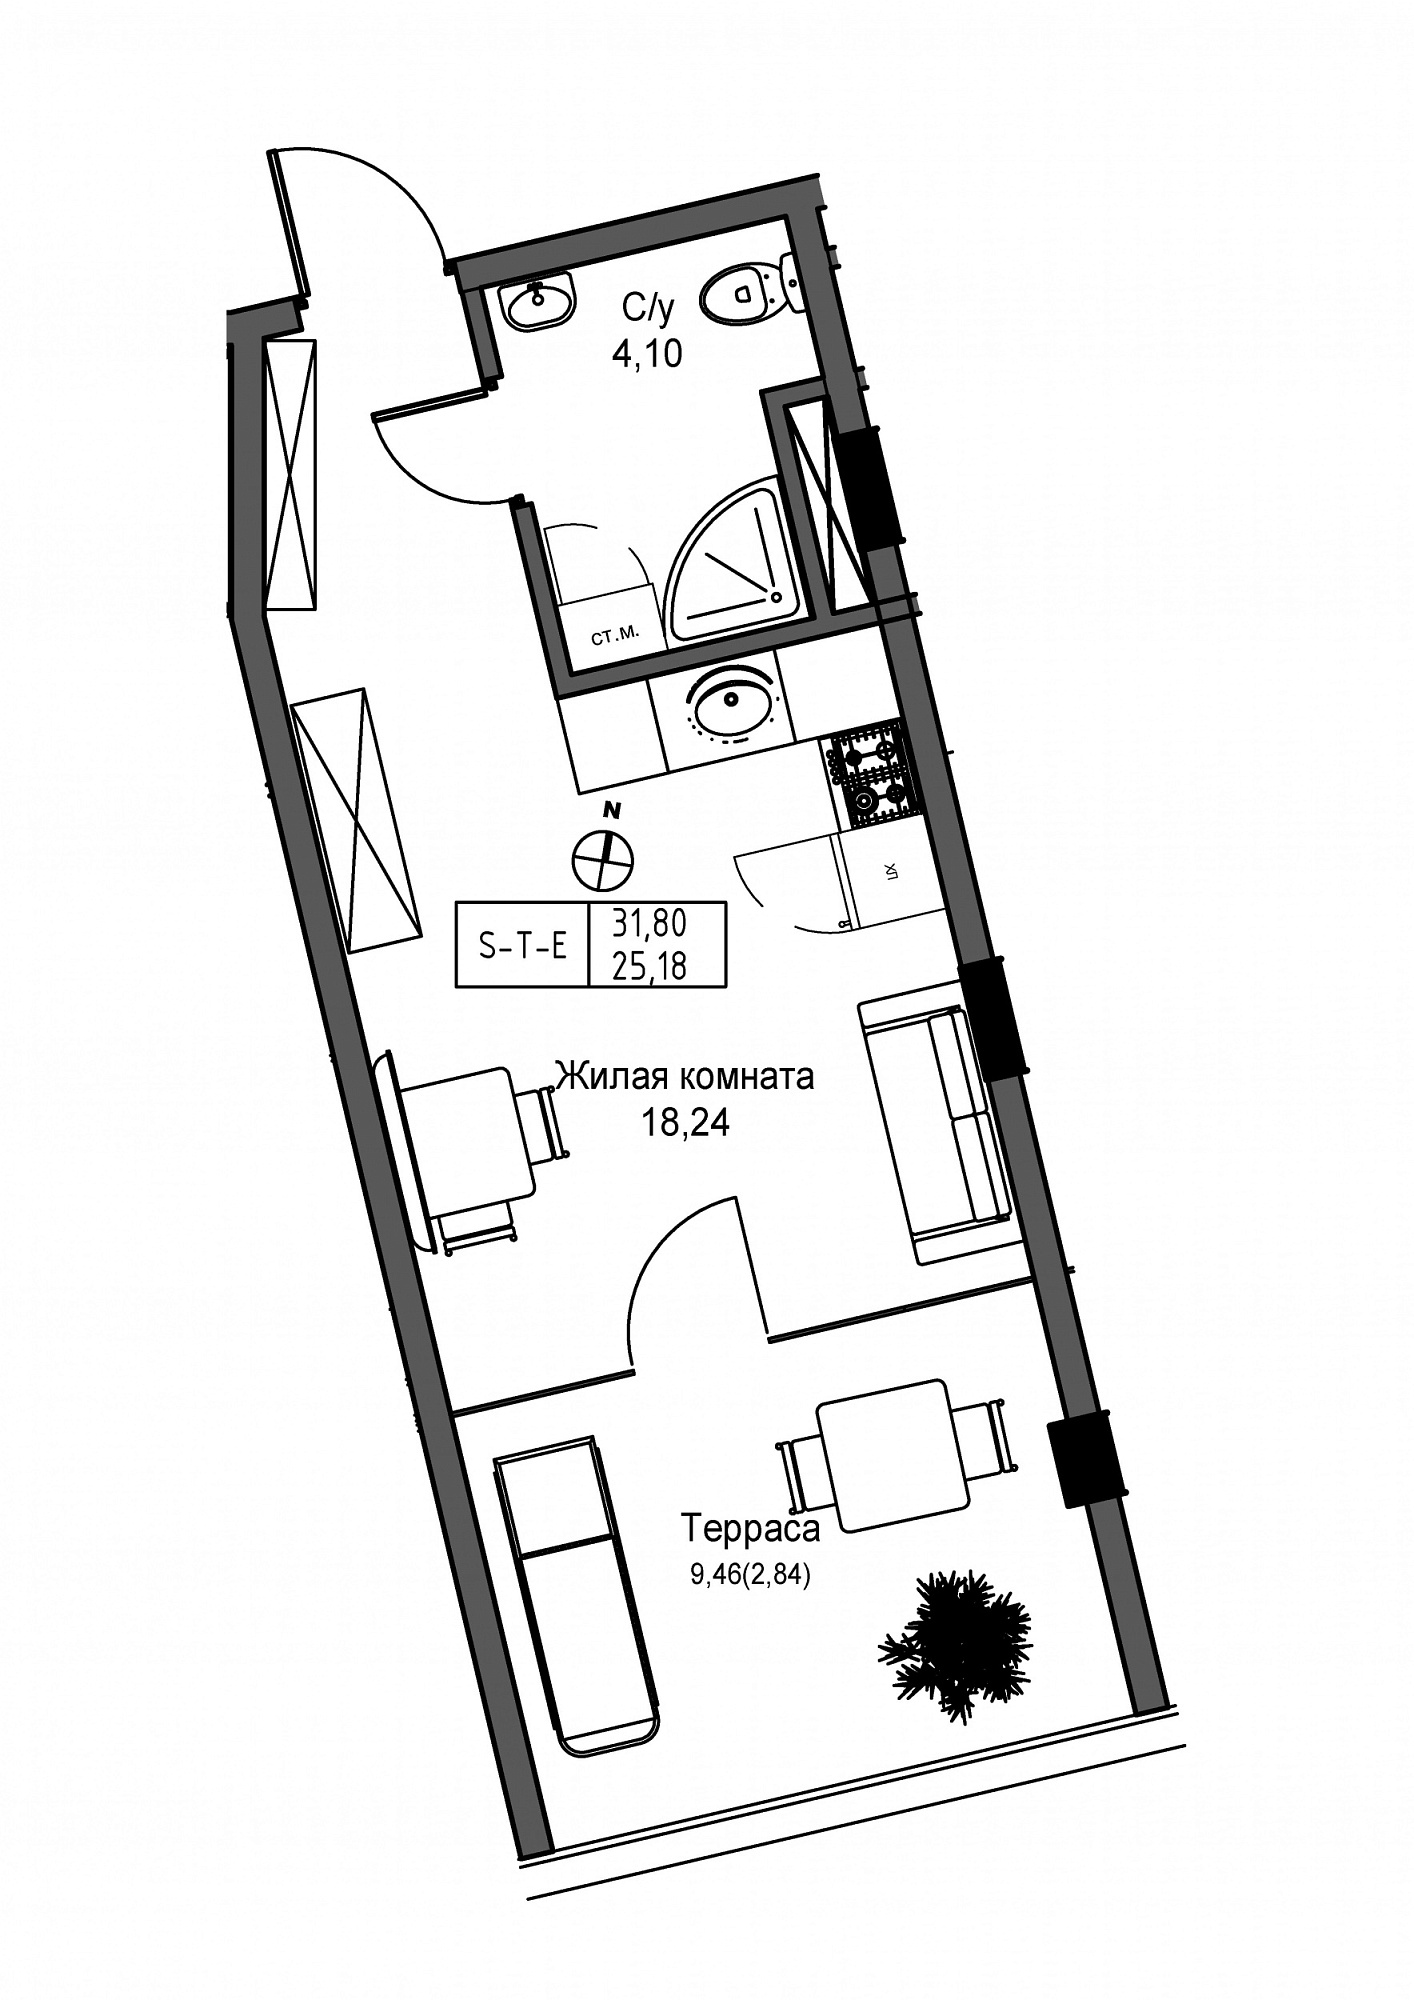 Planning Smart flats area 25.18m2, UM-004-03/0014.